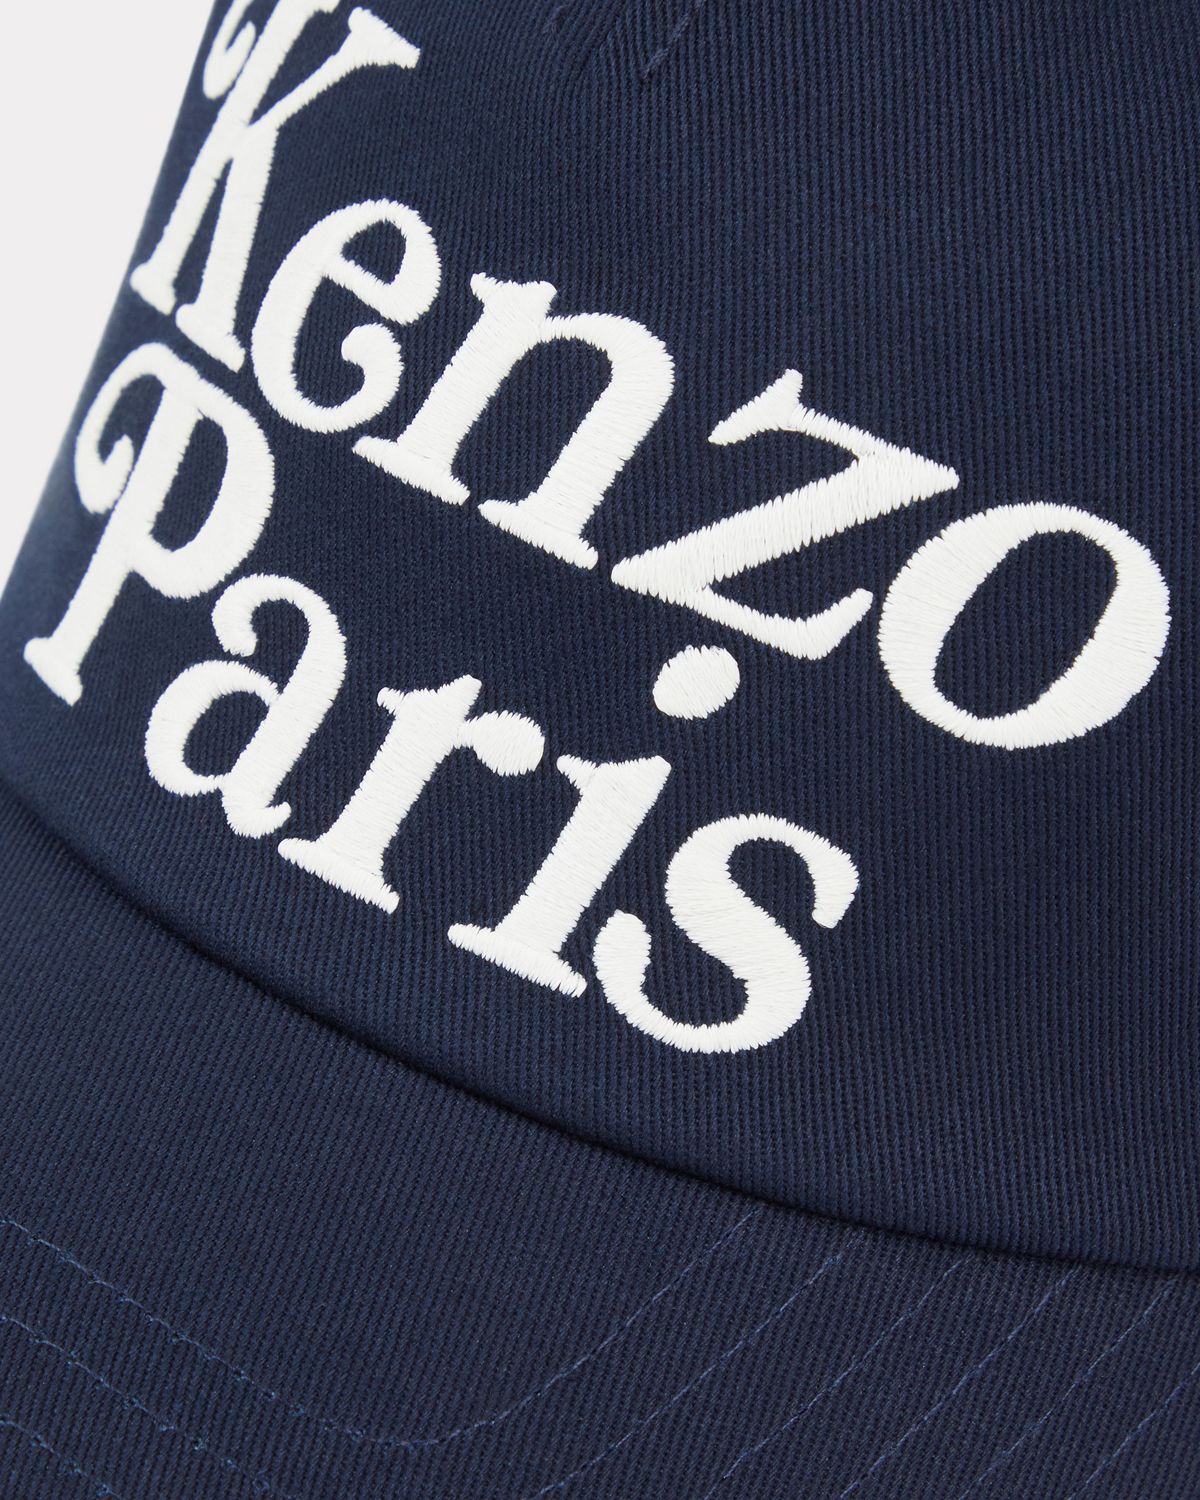 KENZO - 【ラスト1点】【限定】 KENZO x VERDY / Cap / ベースボール